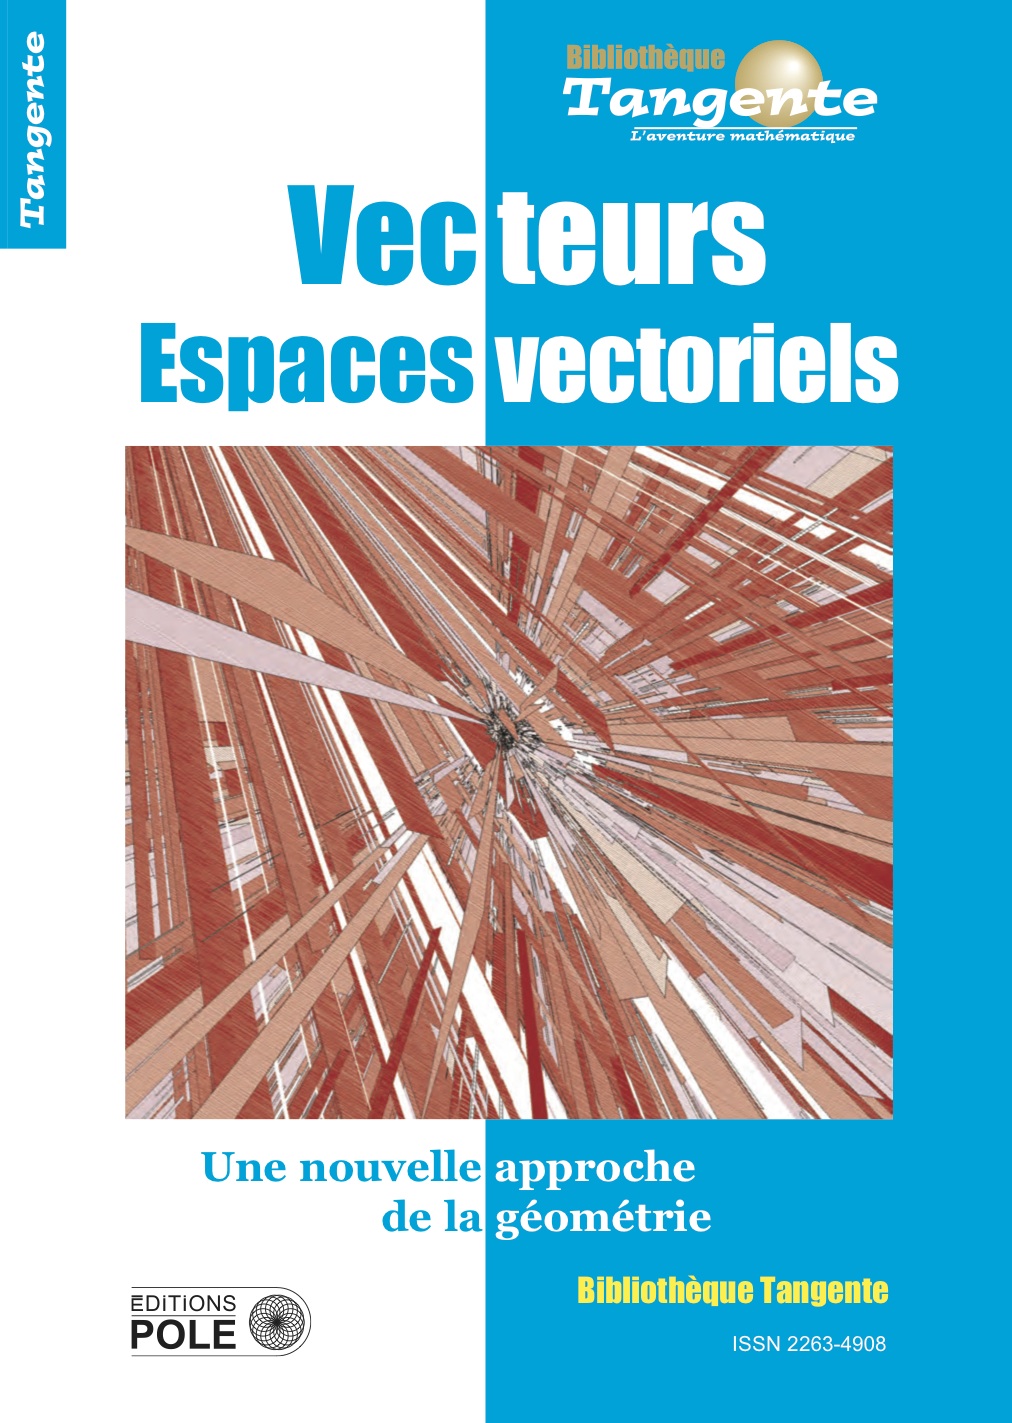 image Bib 65 - Vecteurs, espaces vectoriels